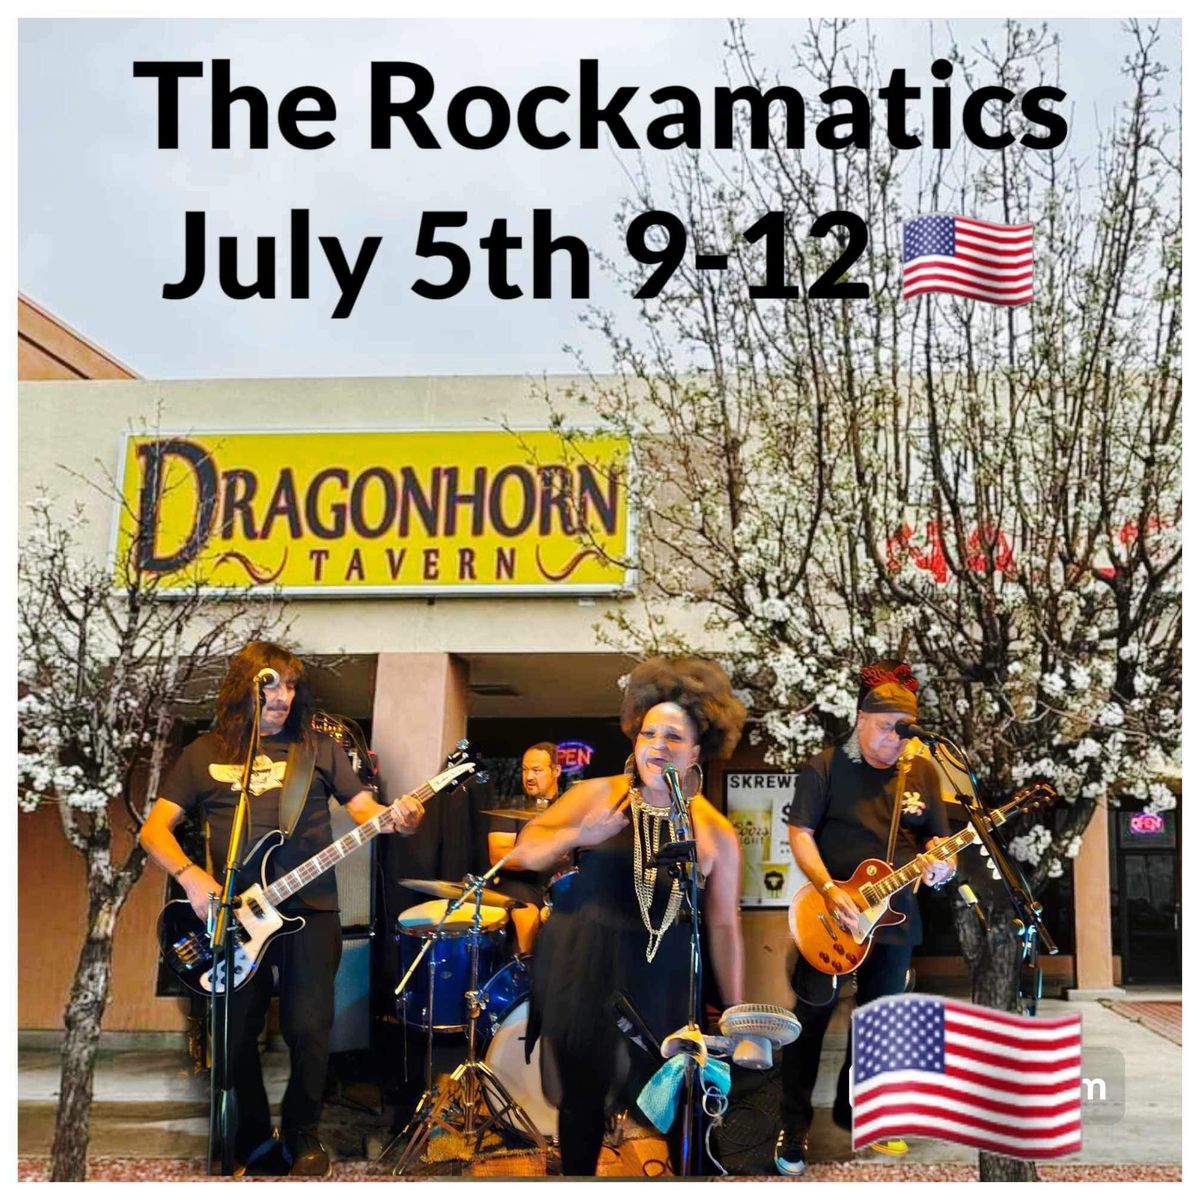 The Rockamatics at Dragonhorn Tavern